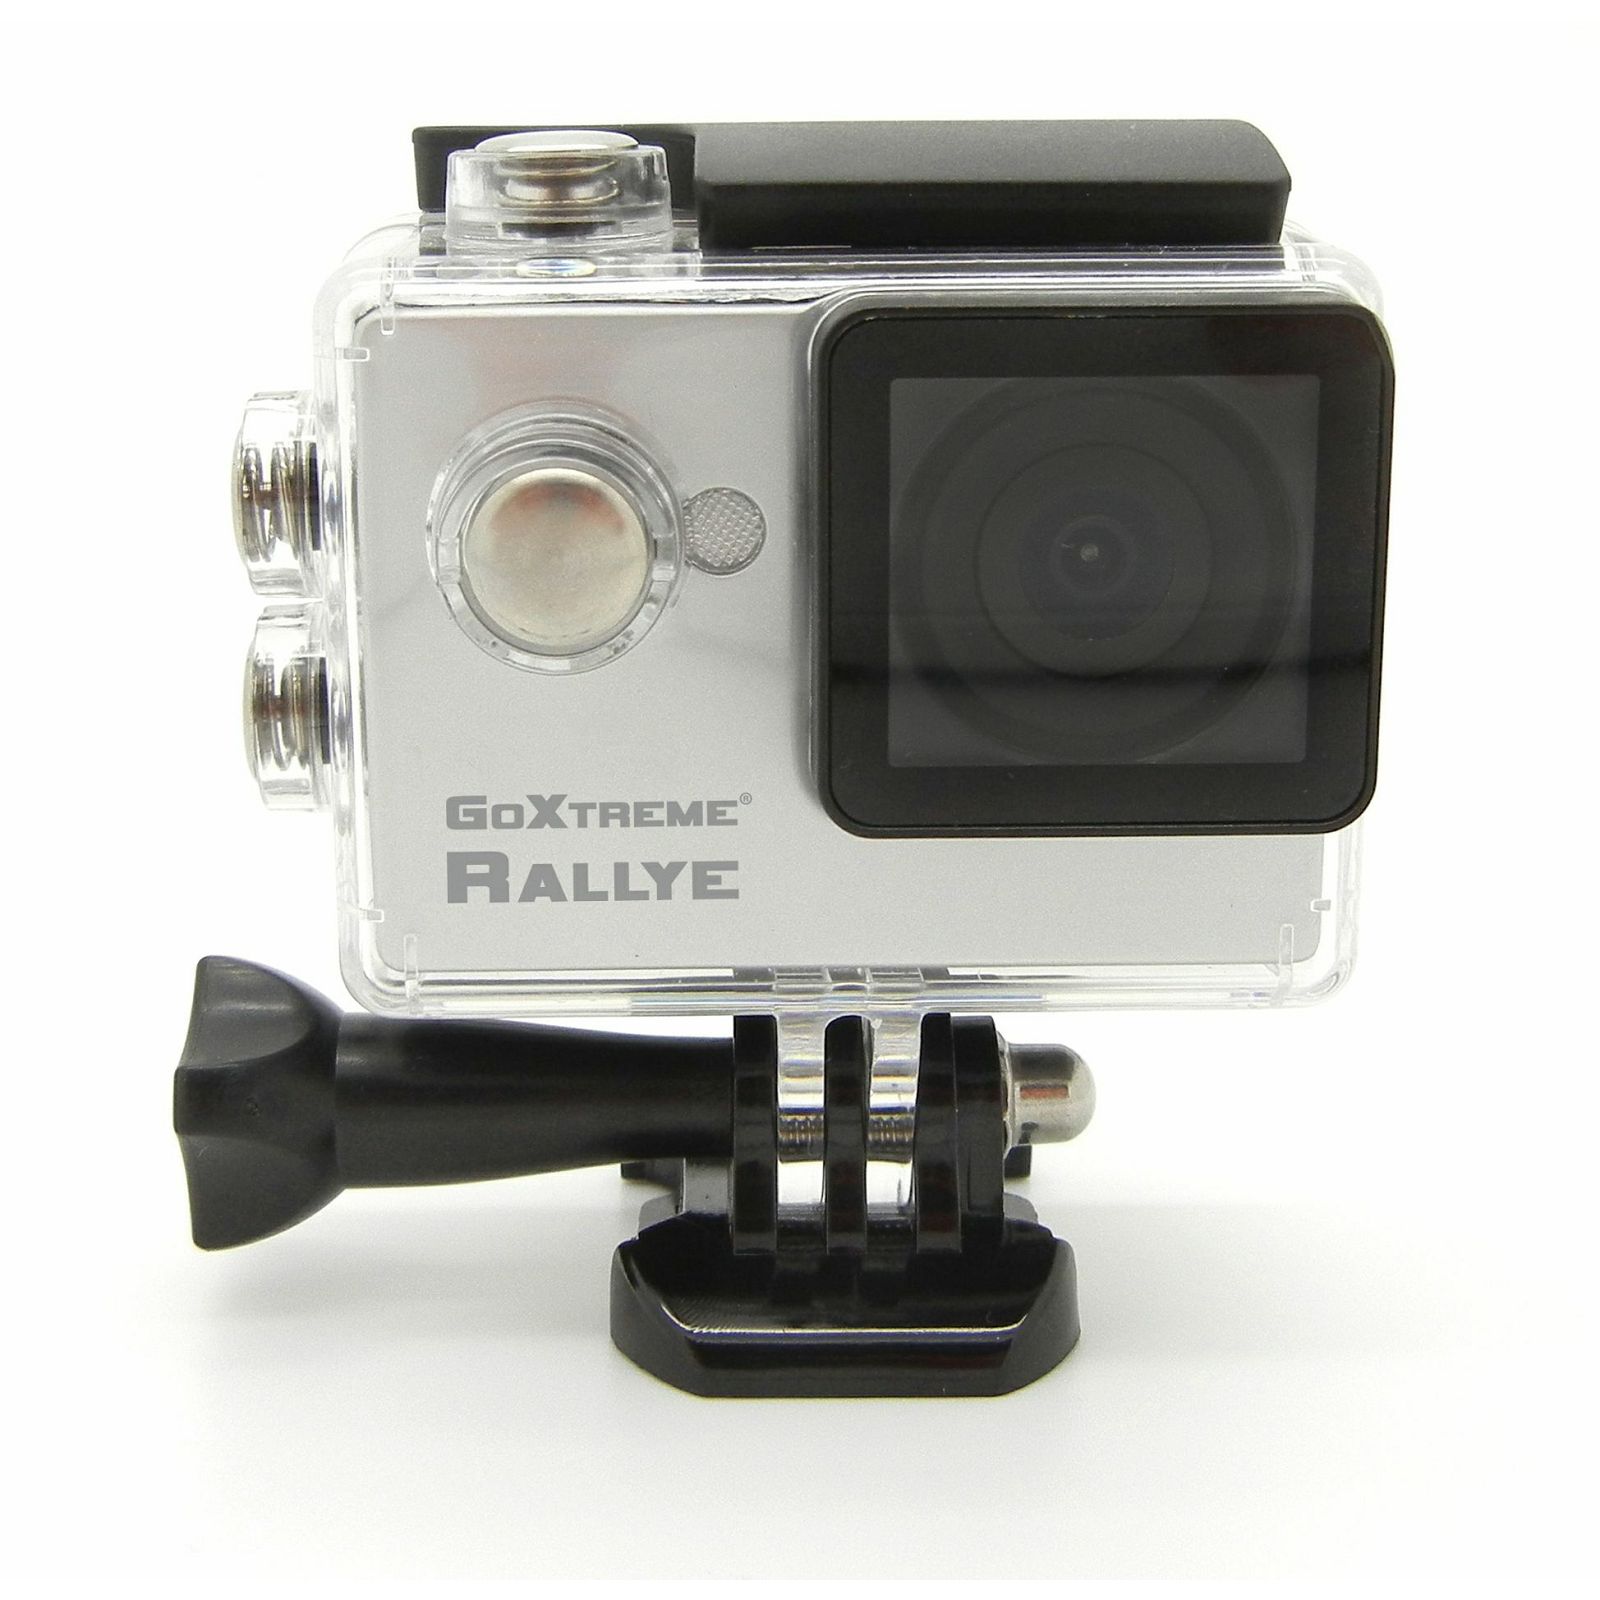 GoXtreme Rallye WiFi Action Camera Waterproof sportska akcijska kamera vodootporna do 30m (20145)